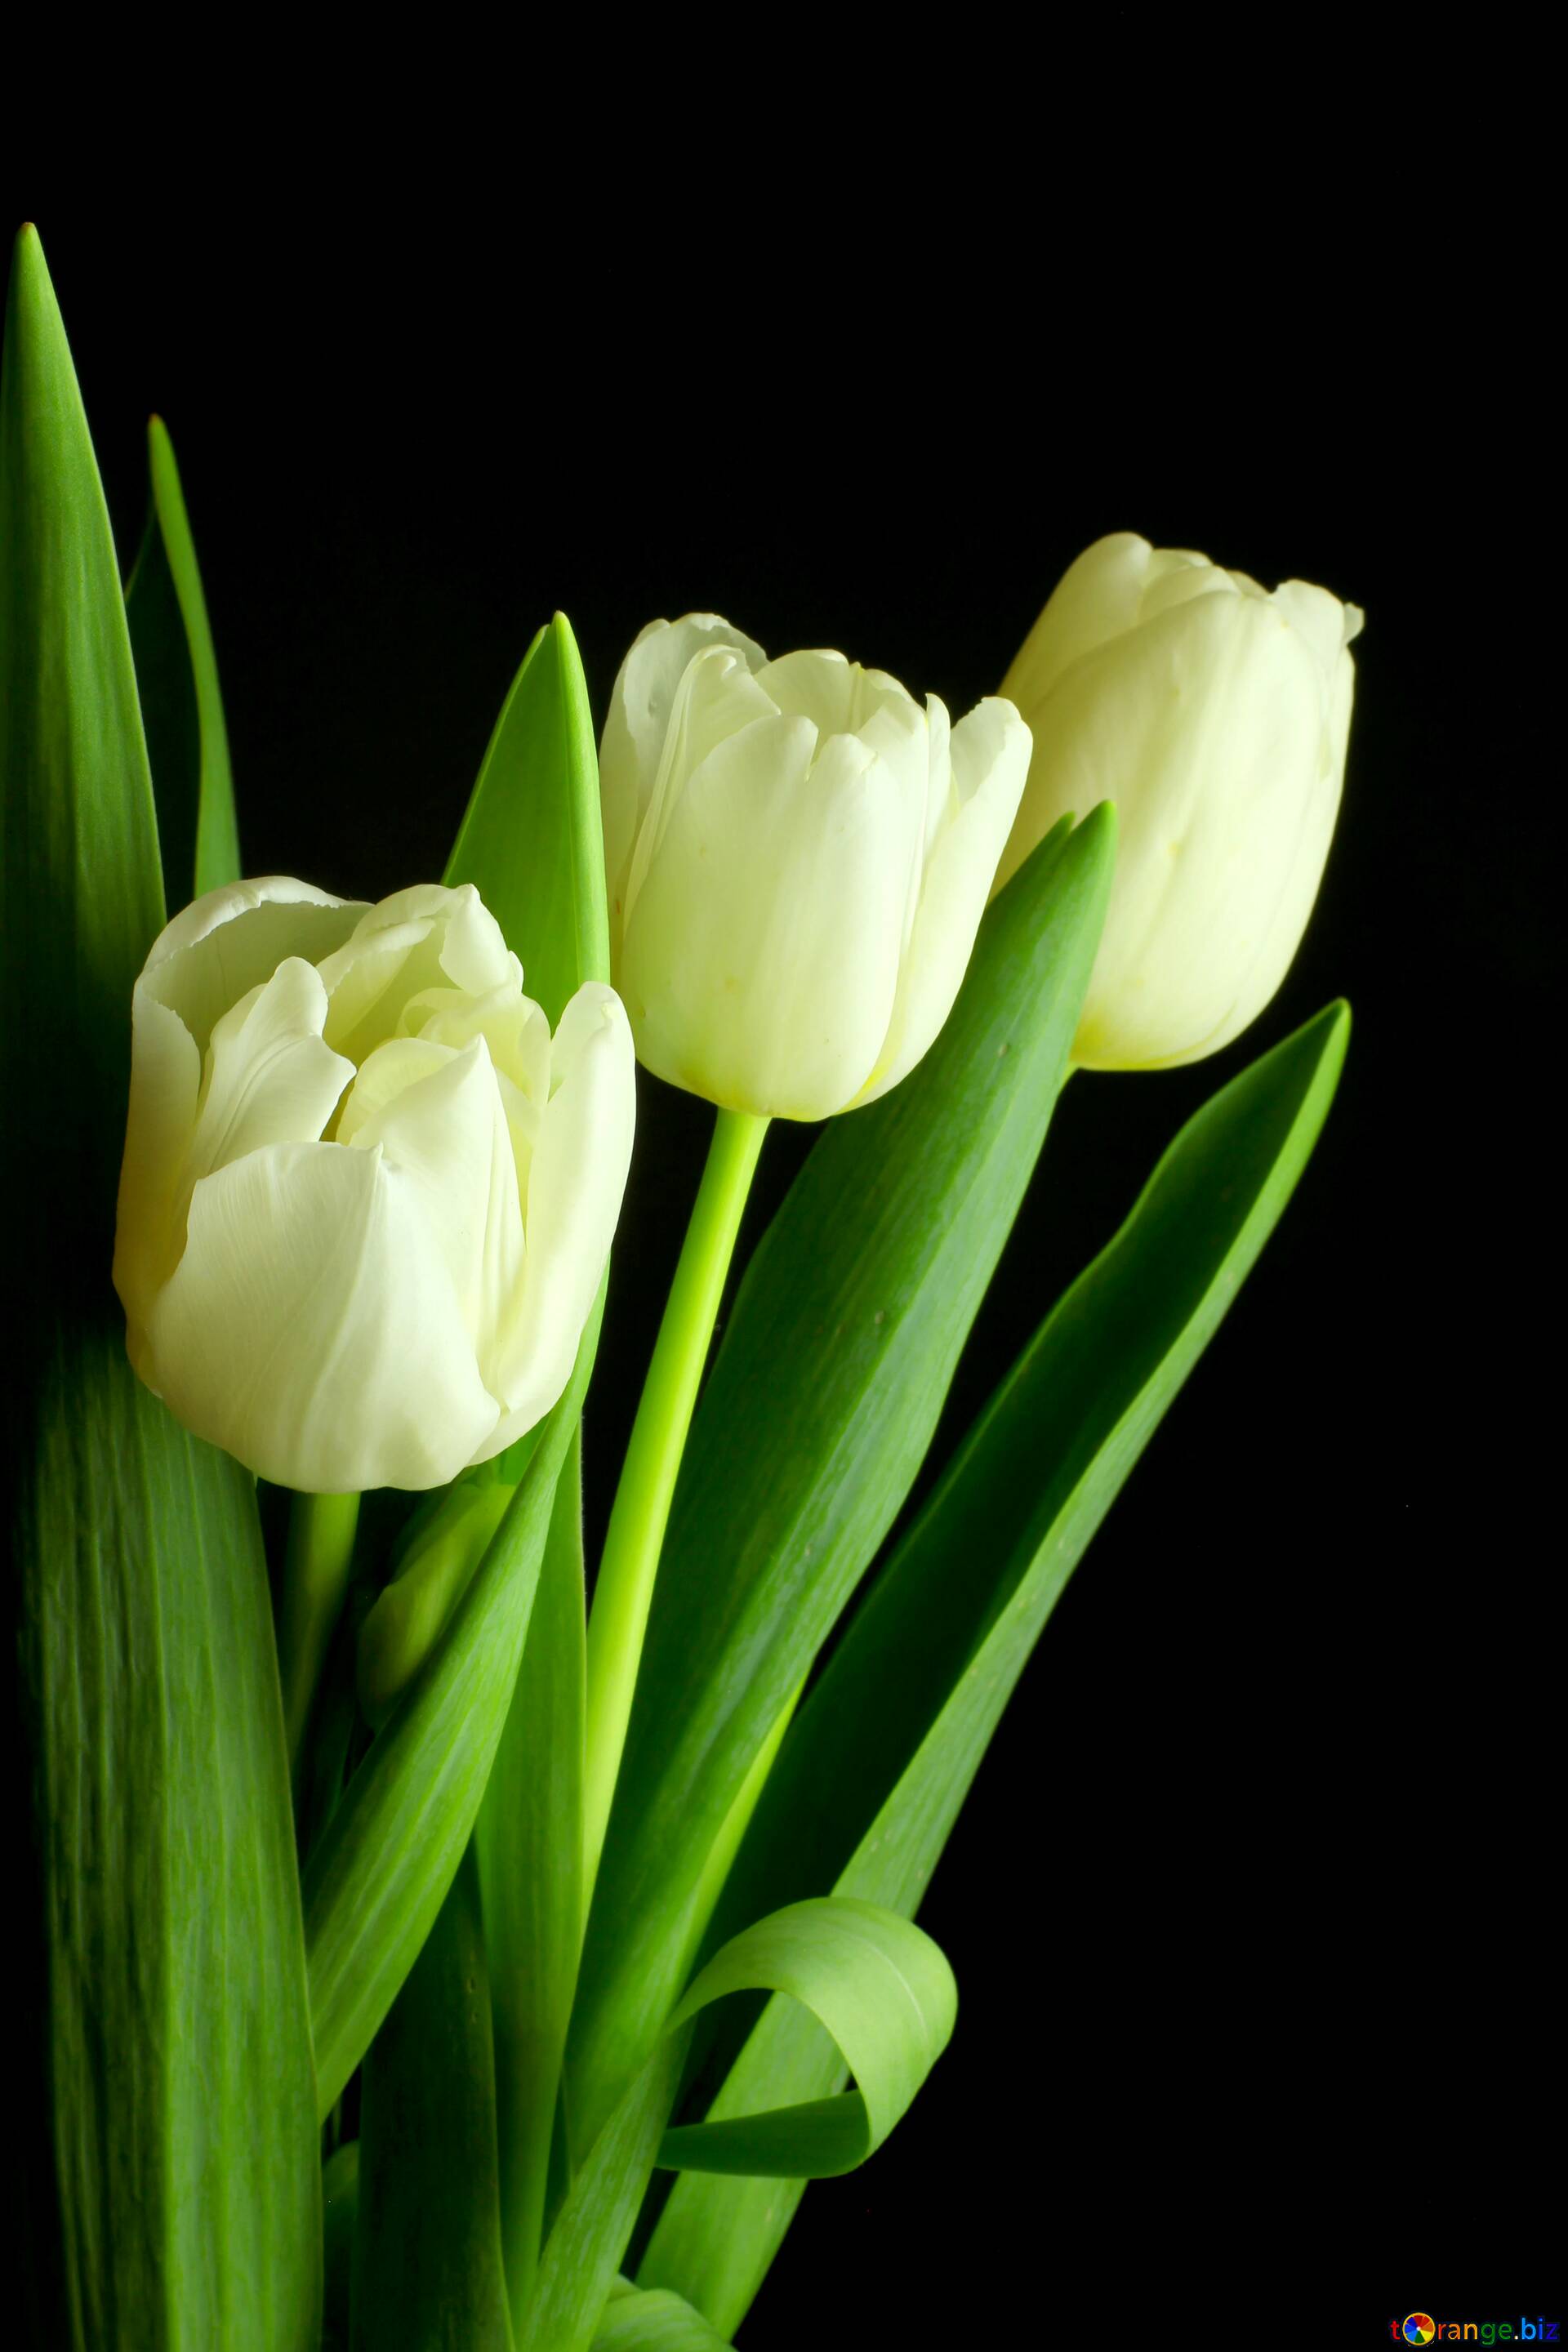 Download Free Picture Tulips Bouquet Dark Background On Cc By License Free Image Stock Torange Biz Fx 77606